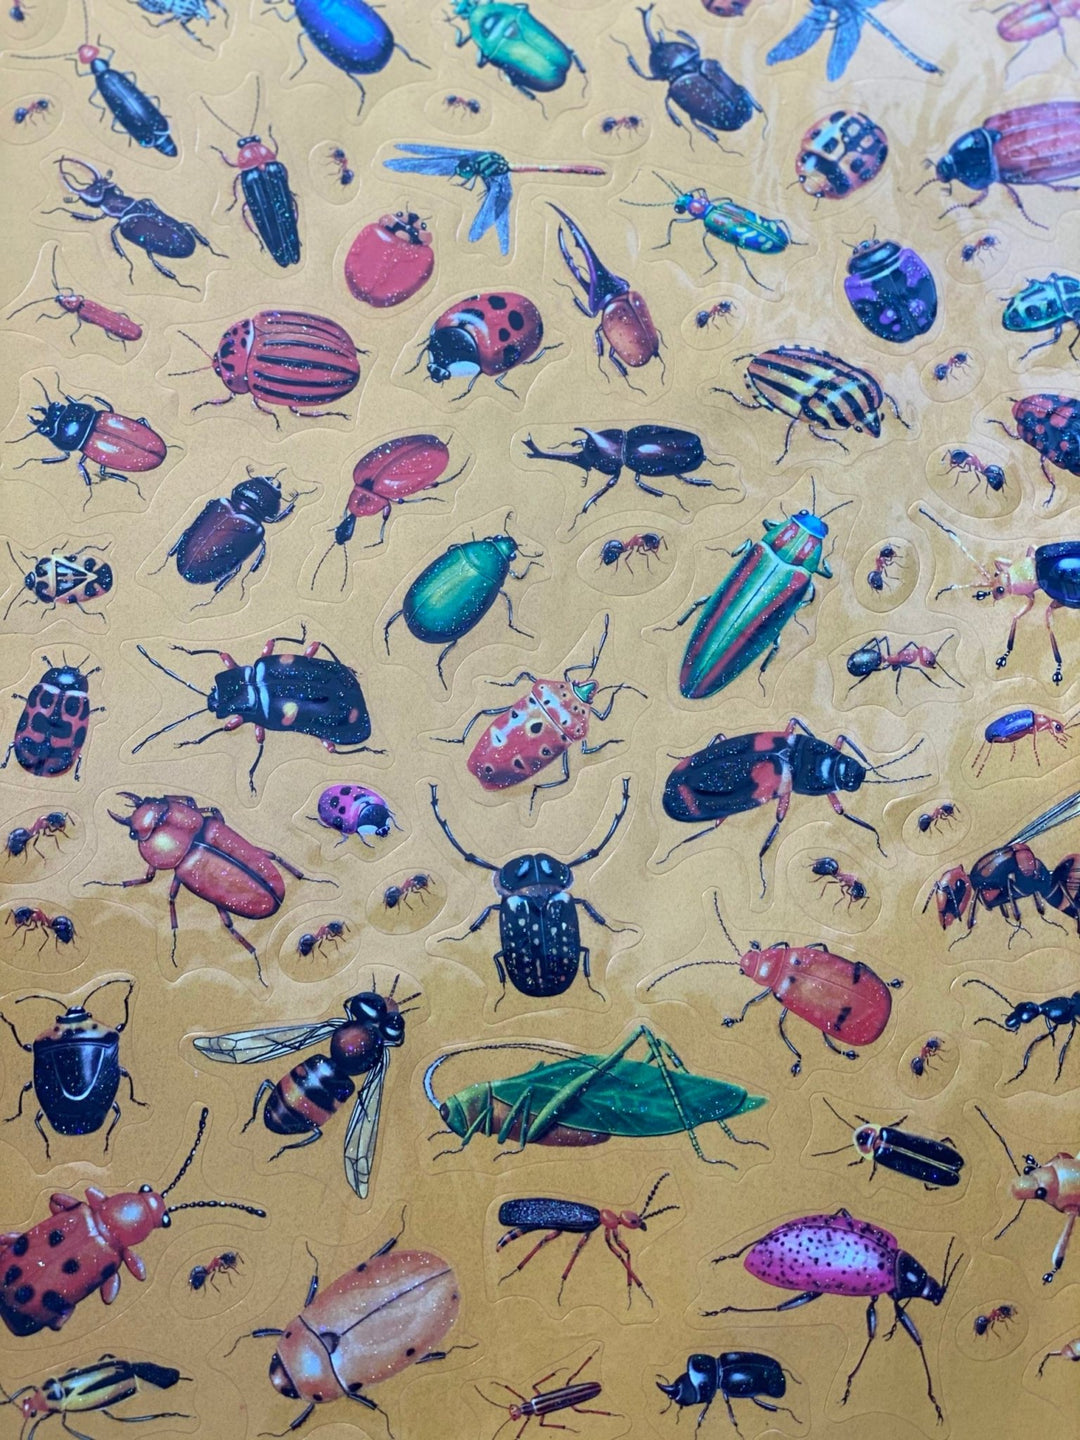 Insects glittered stickers - #HolaNanu#NDIS #creativekids